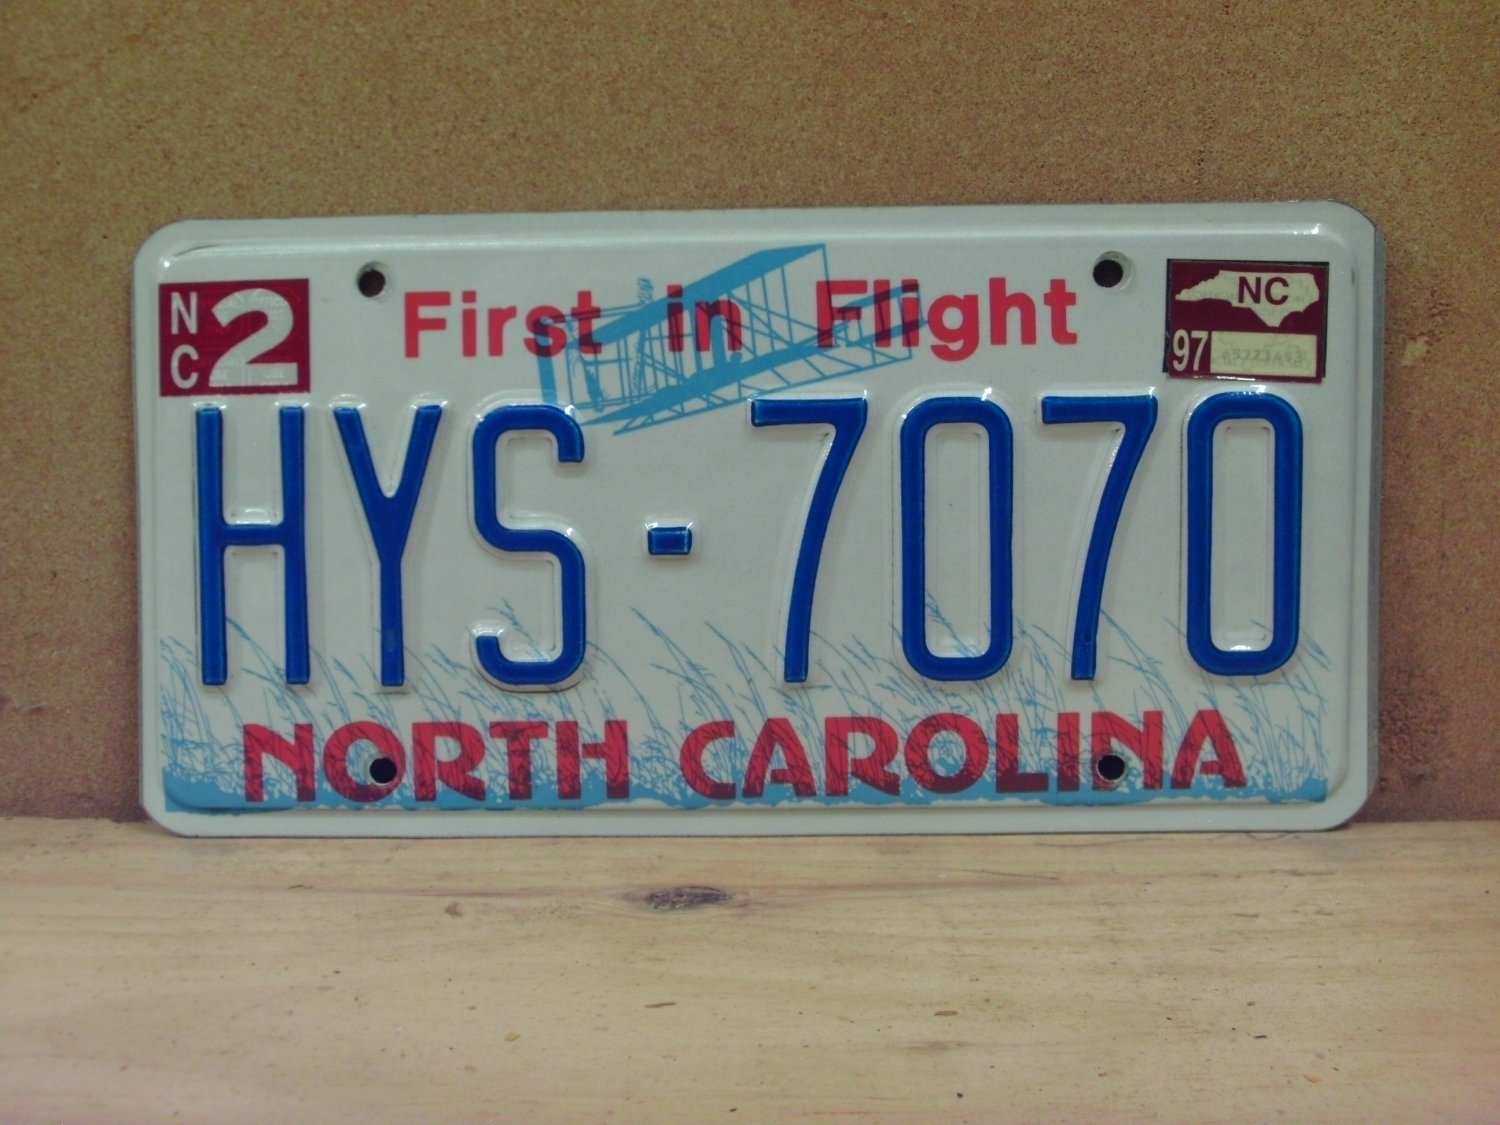 1997 North Carolina NC License Plate With Registration HYS-7070 EX-R